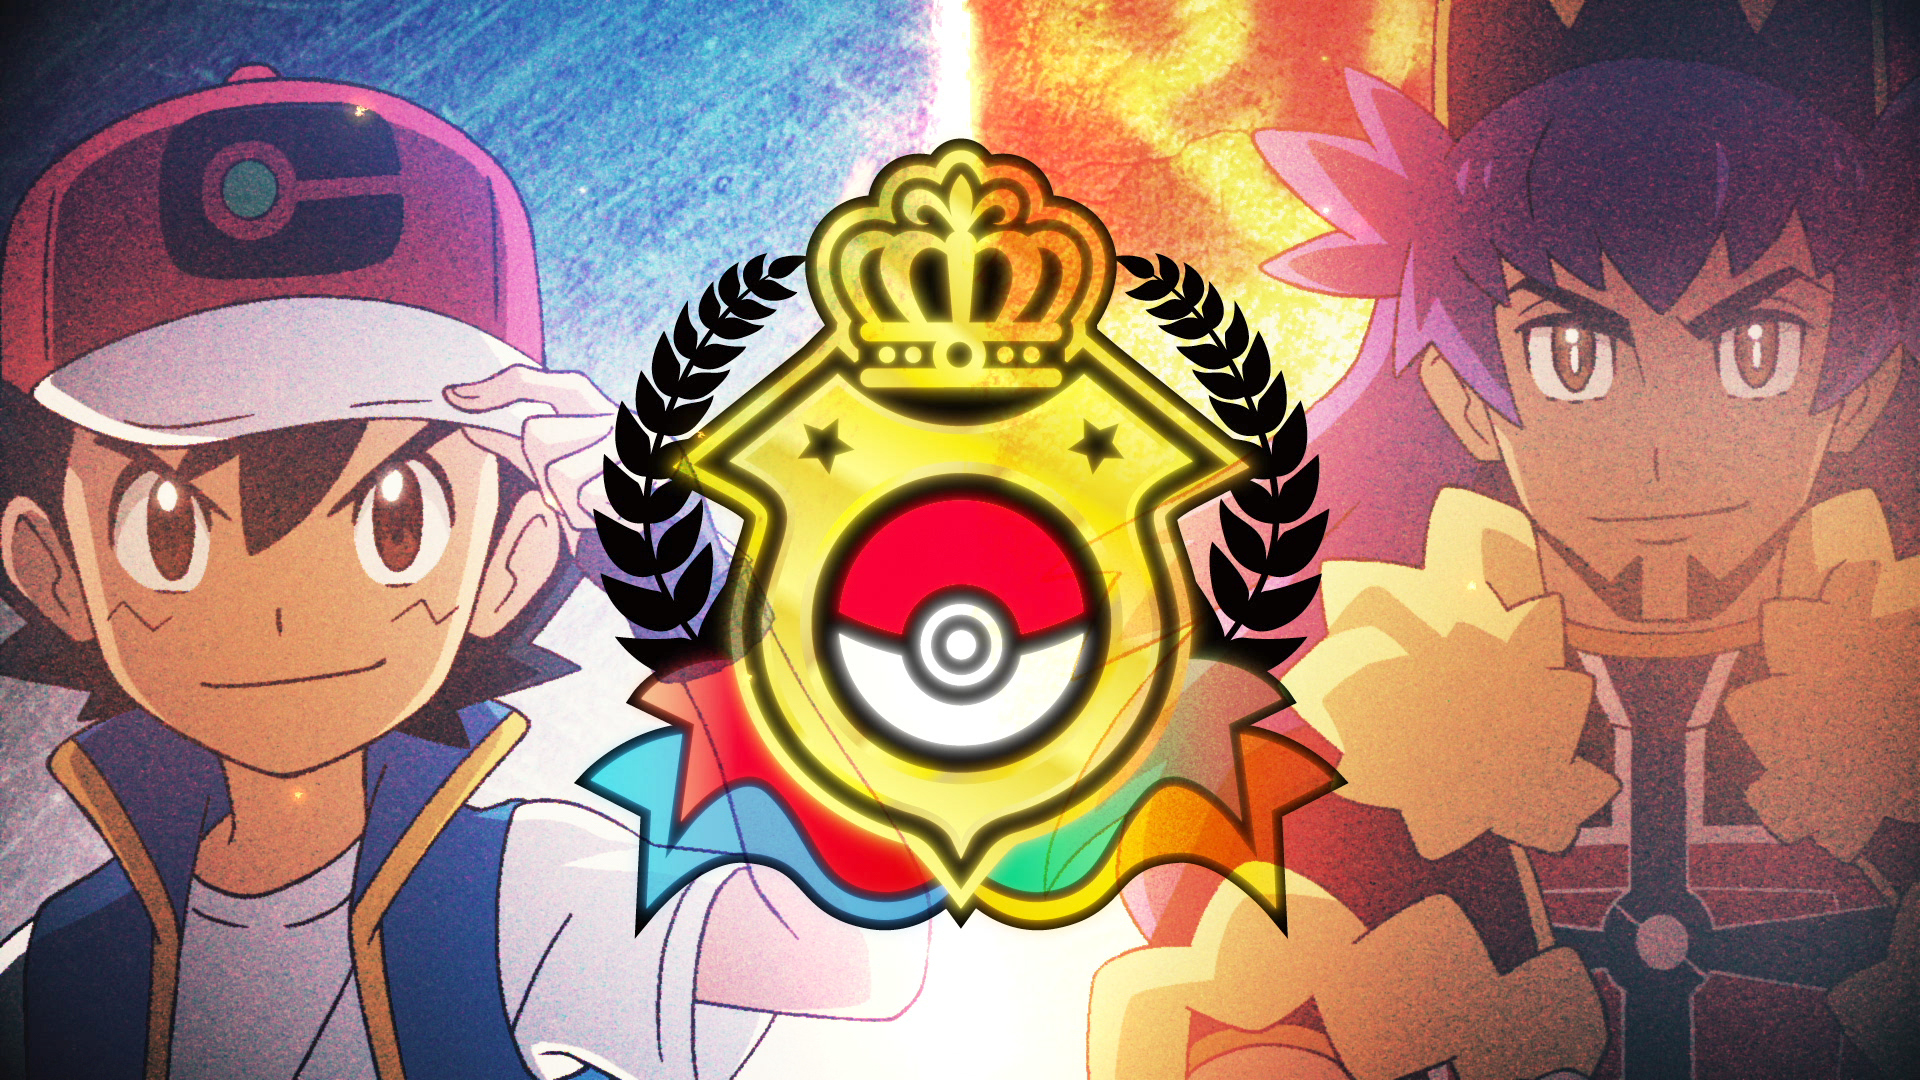 Pokémon Horizons: The Series' Premiering in the U.S. Feb. 23, 2024